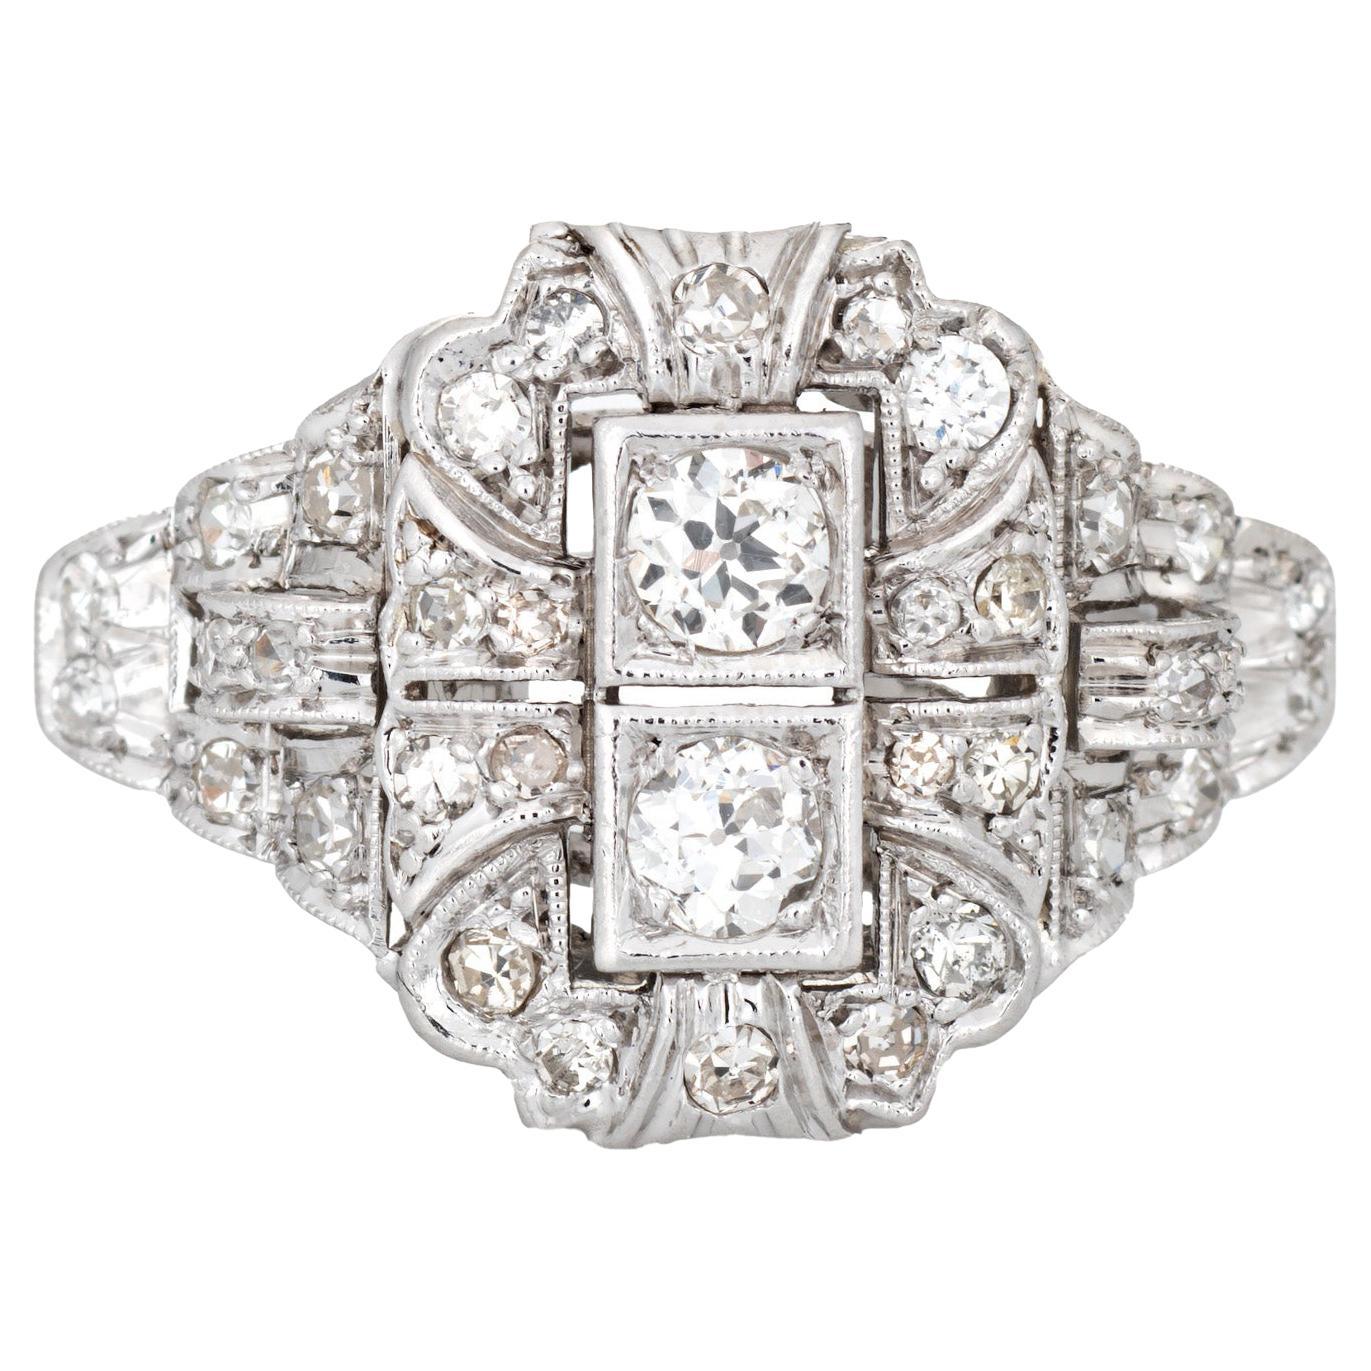 Antique Deco Diamond Ring Platinum Cocktail Vintage Estate Jewelry Heirloom For Sale